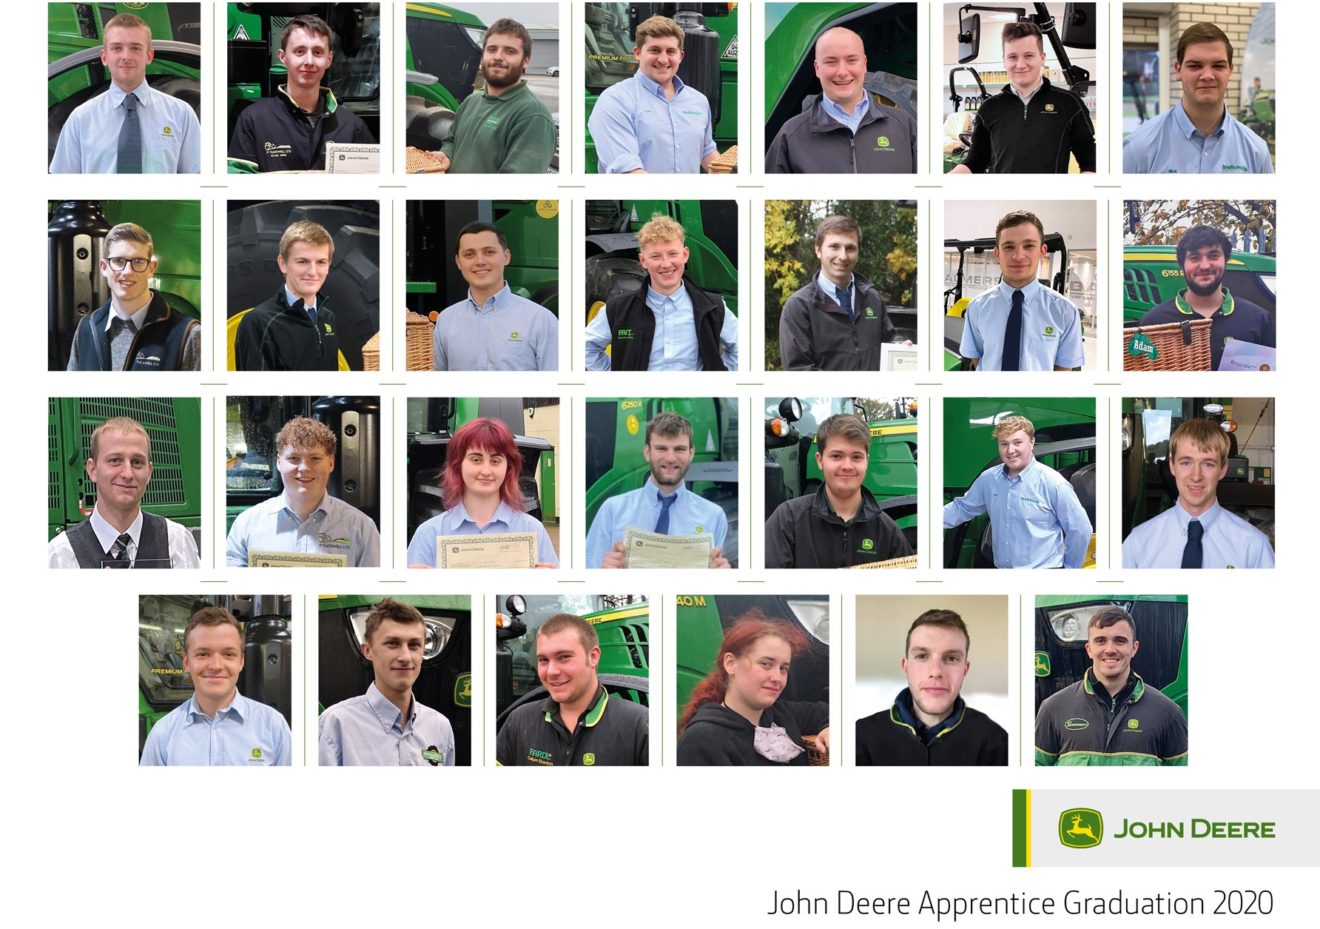 John Deere apprentices graduate